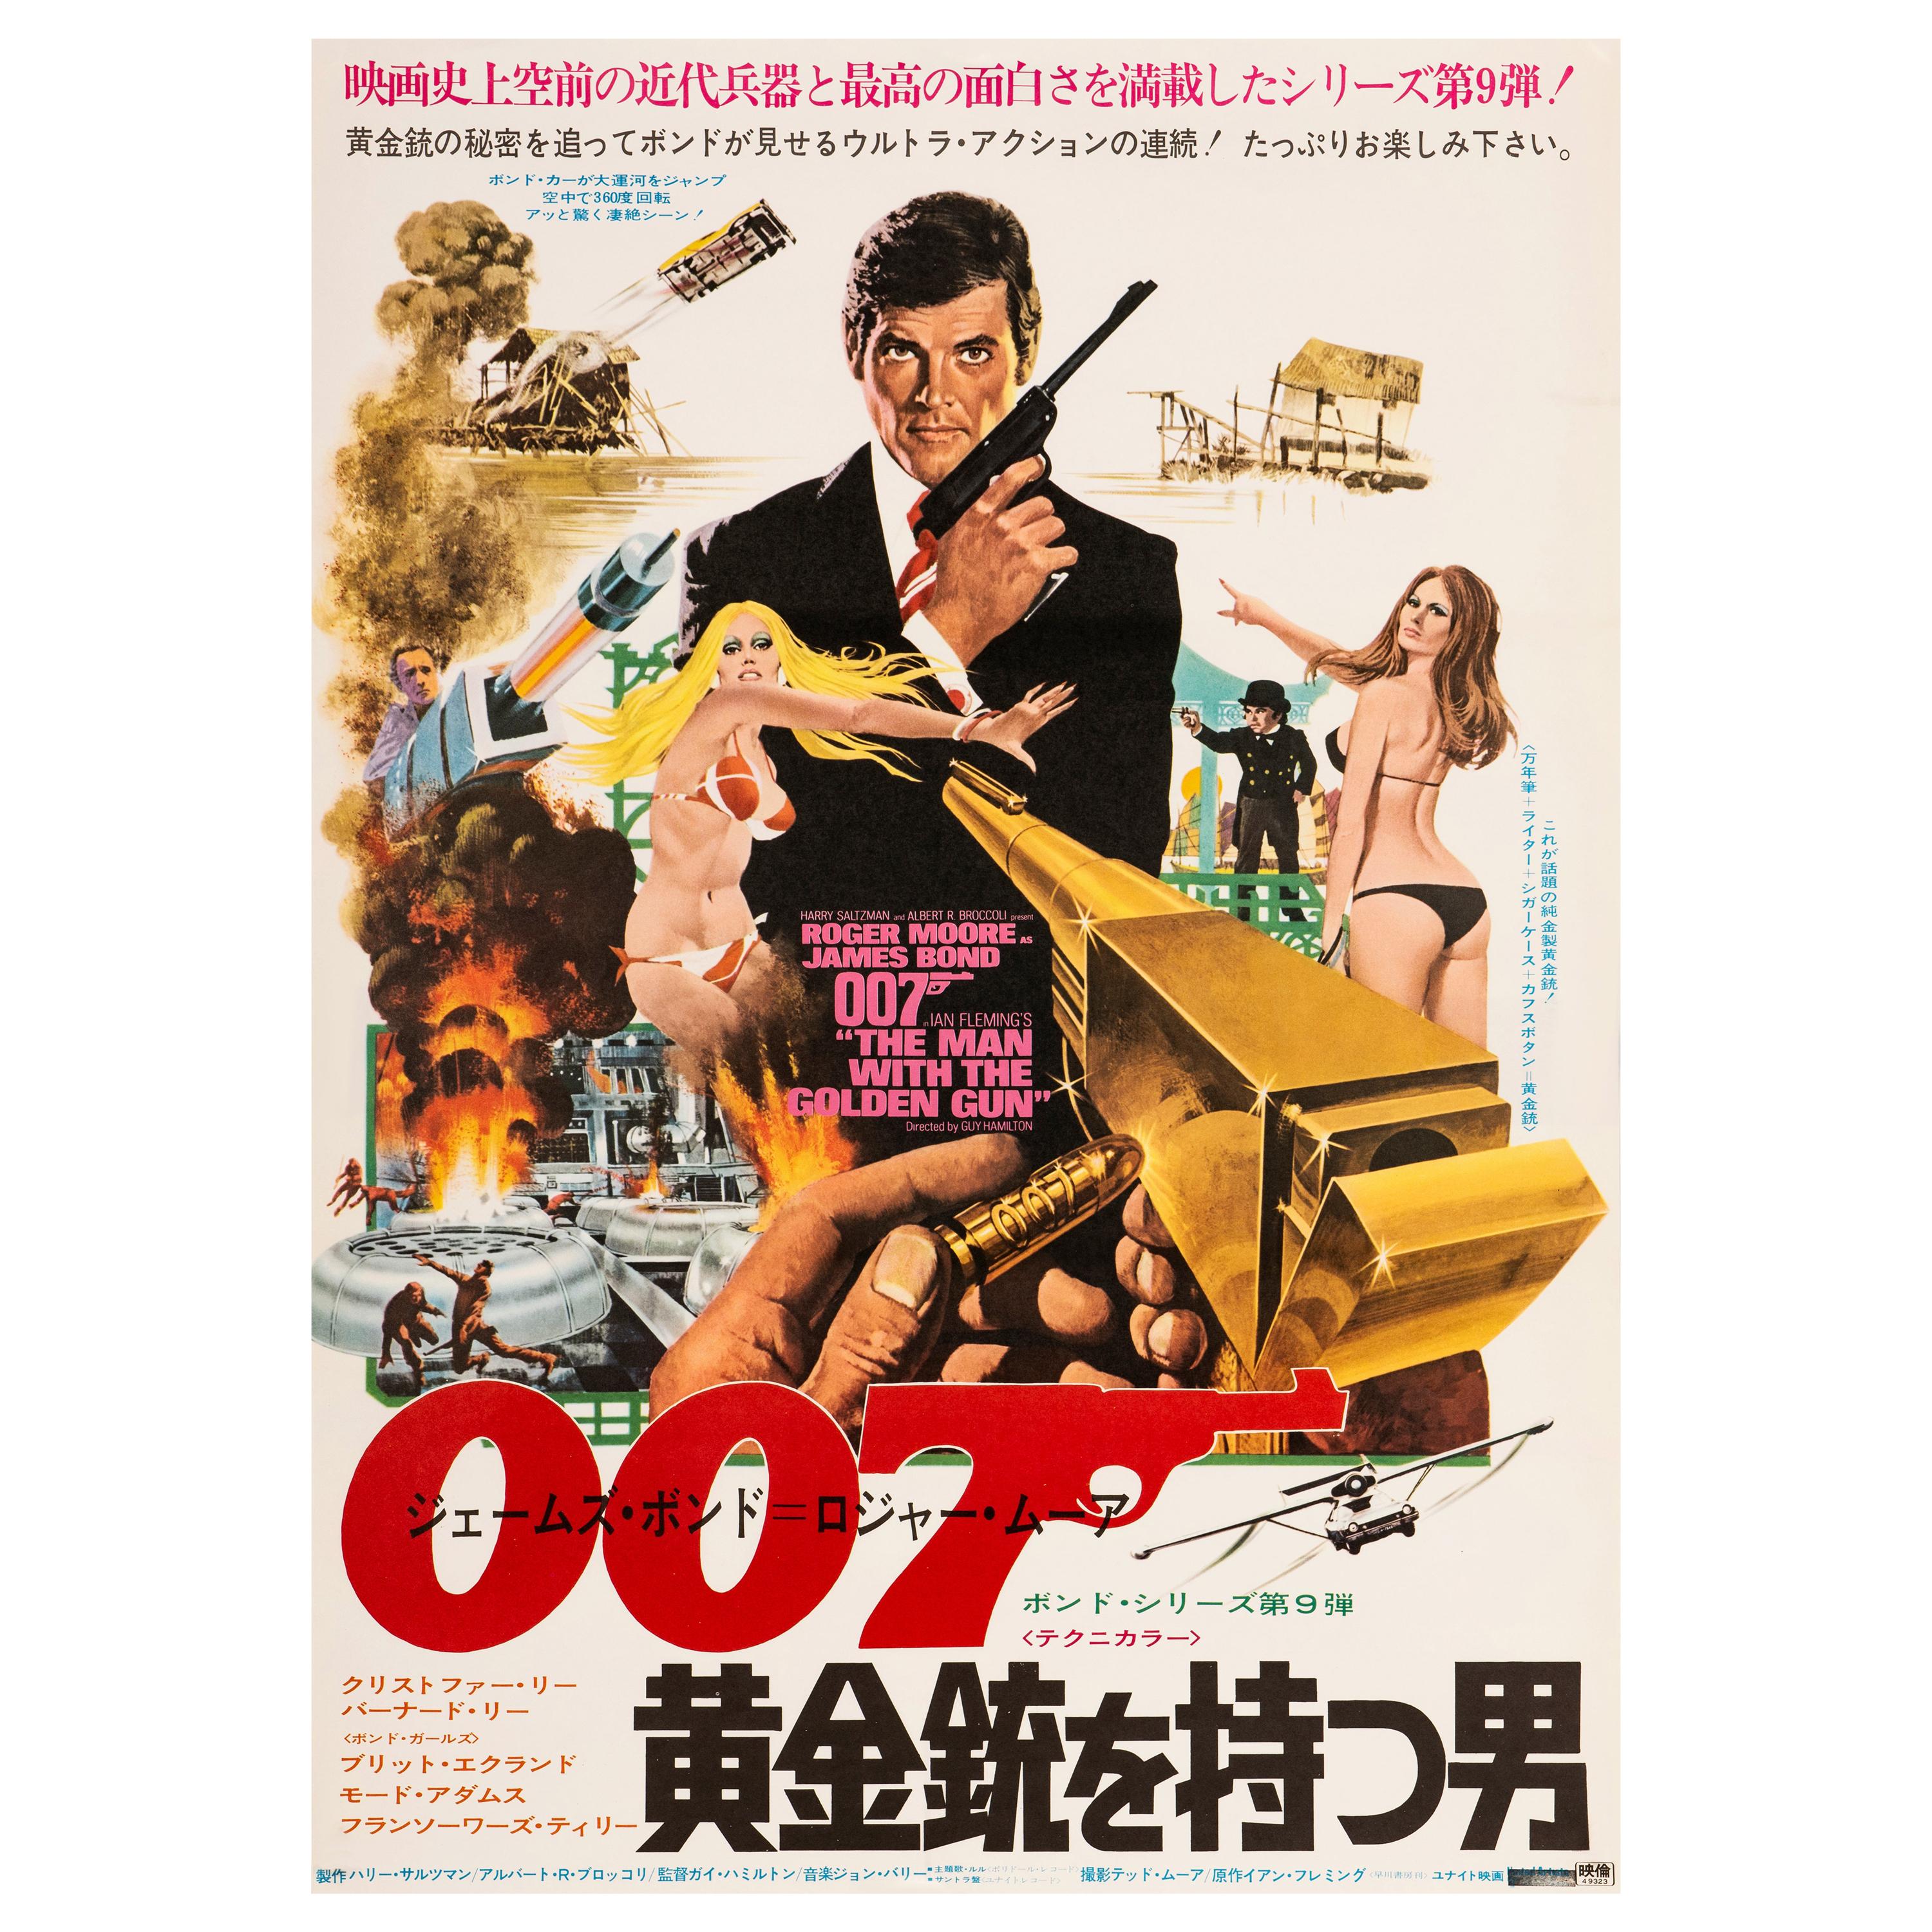 James Bond 'The Man with the Golden Gun' Original Movie Poster, Japanese, 1974